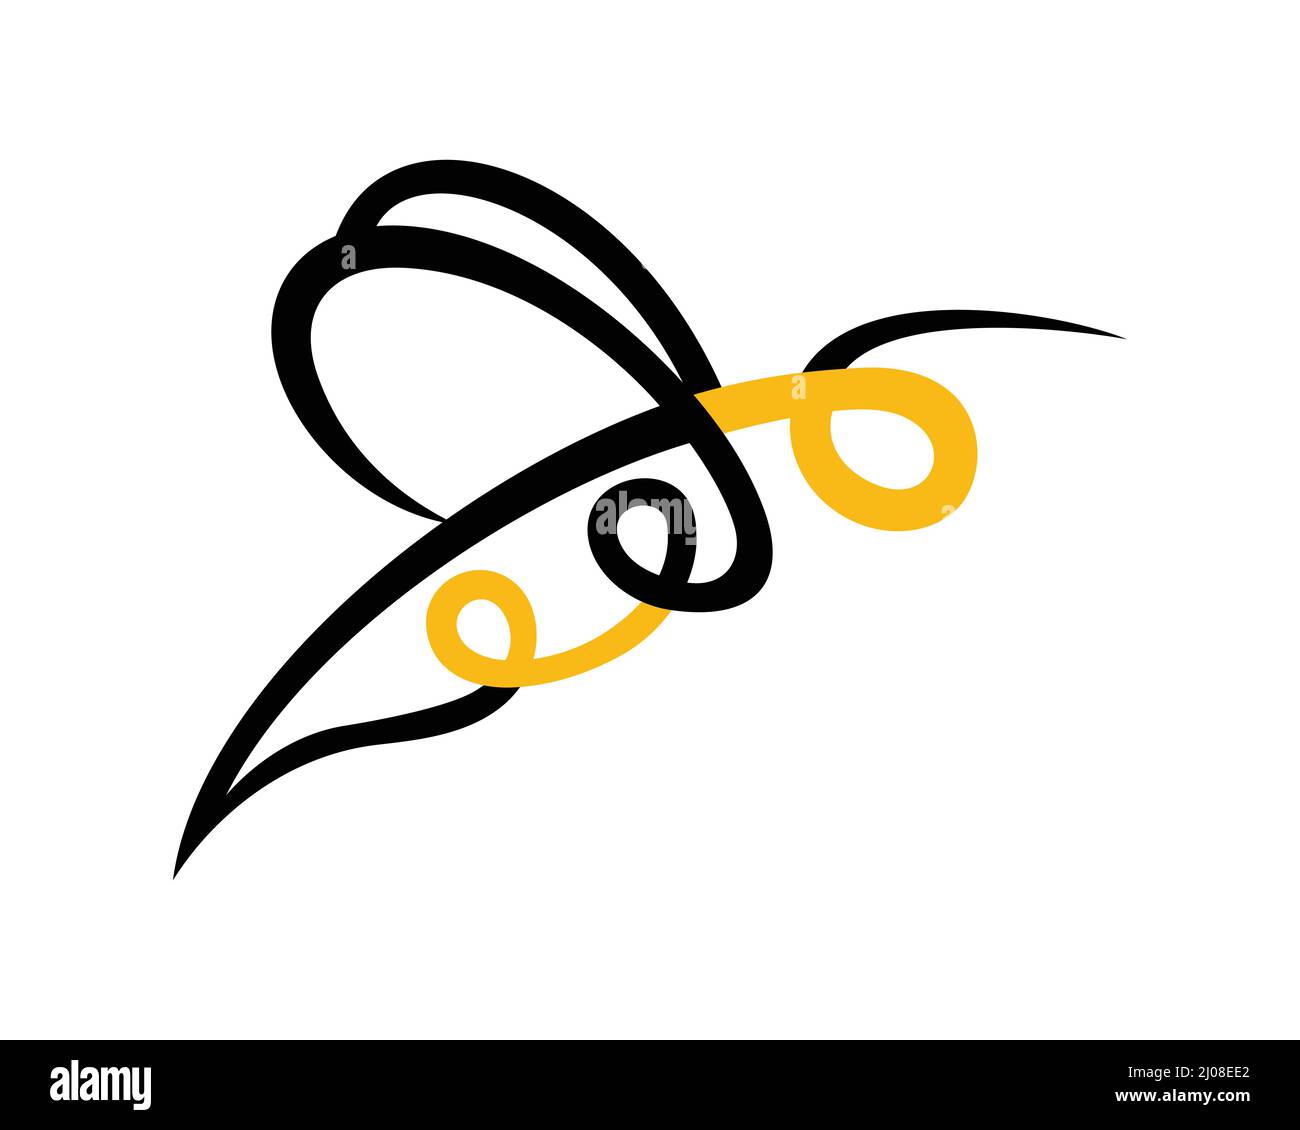 Simple Flying Bee Creative Symbol Stock Vector